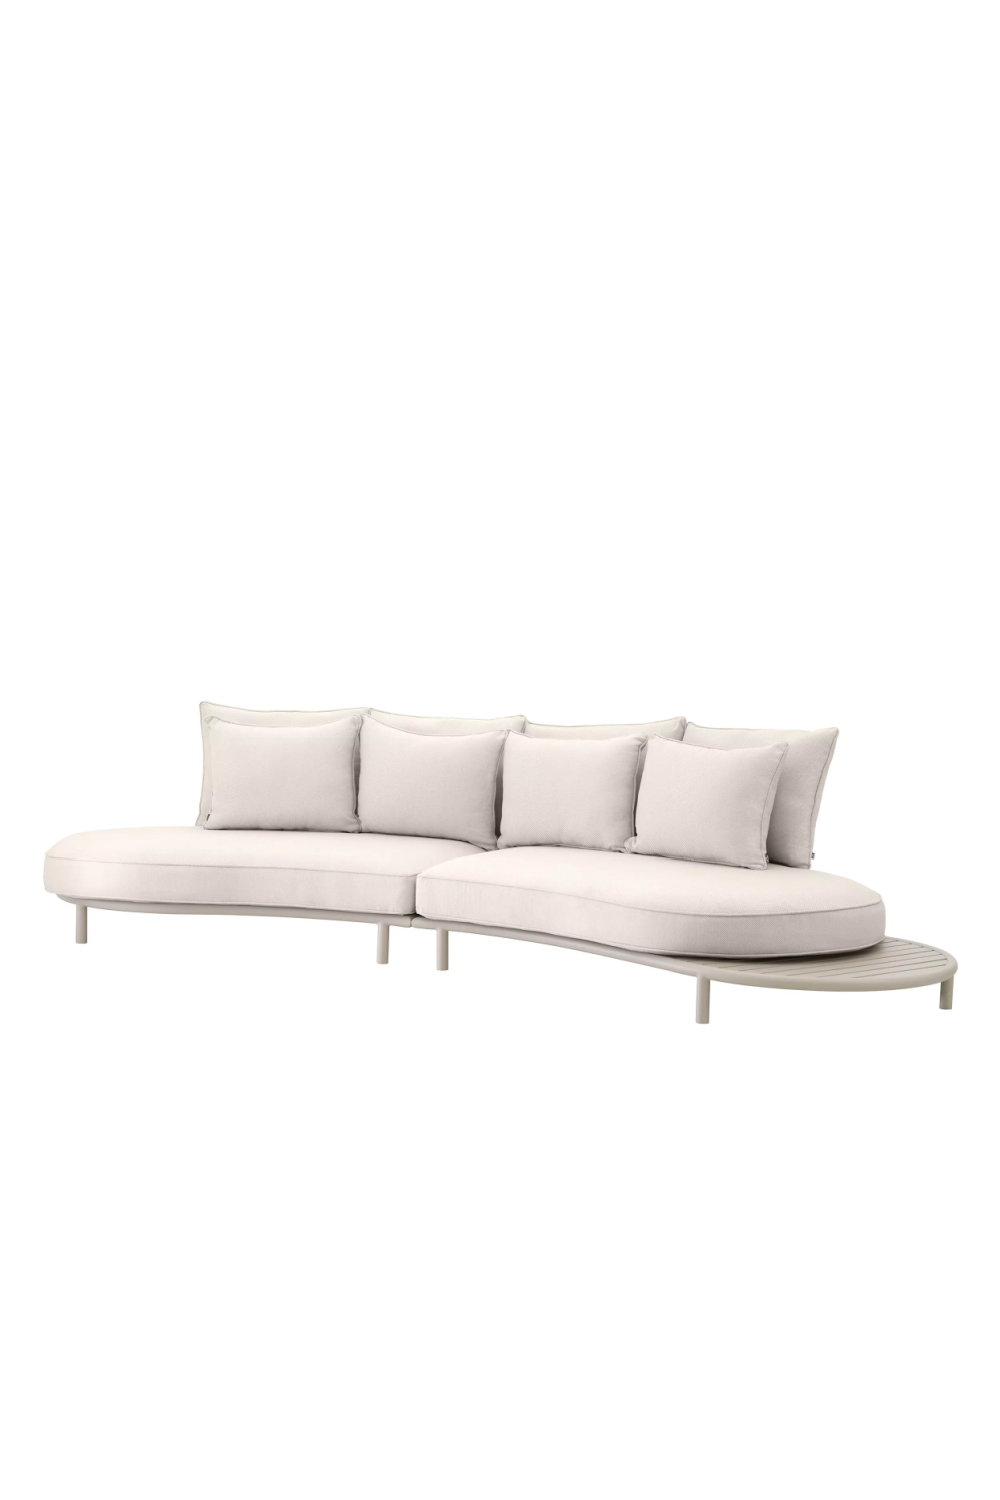 White Curved Outdoor Sofa | Eichholtz Laguno | Oroa.com